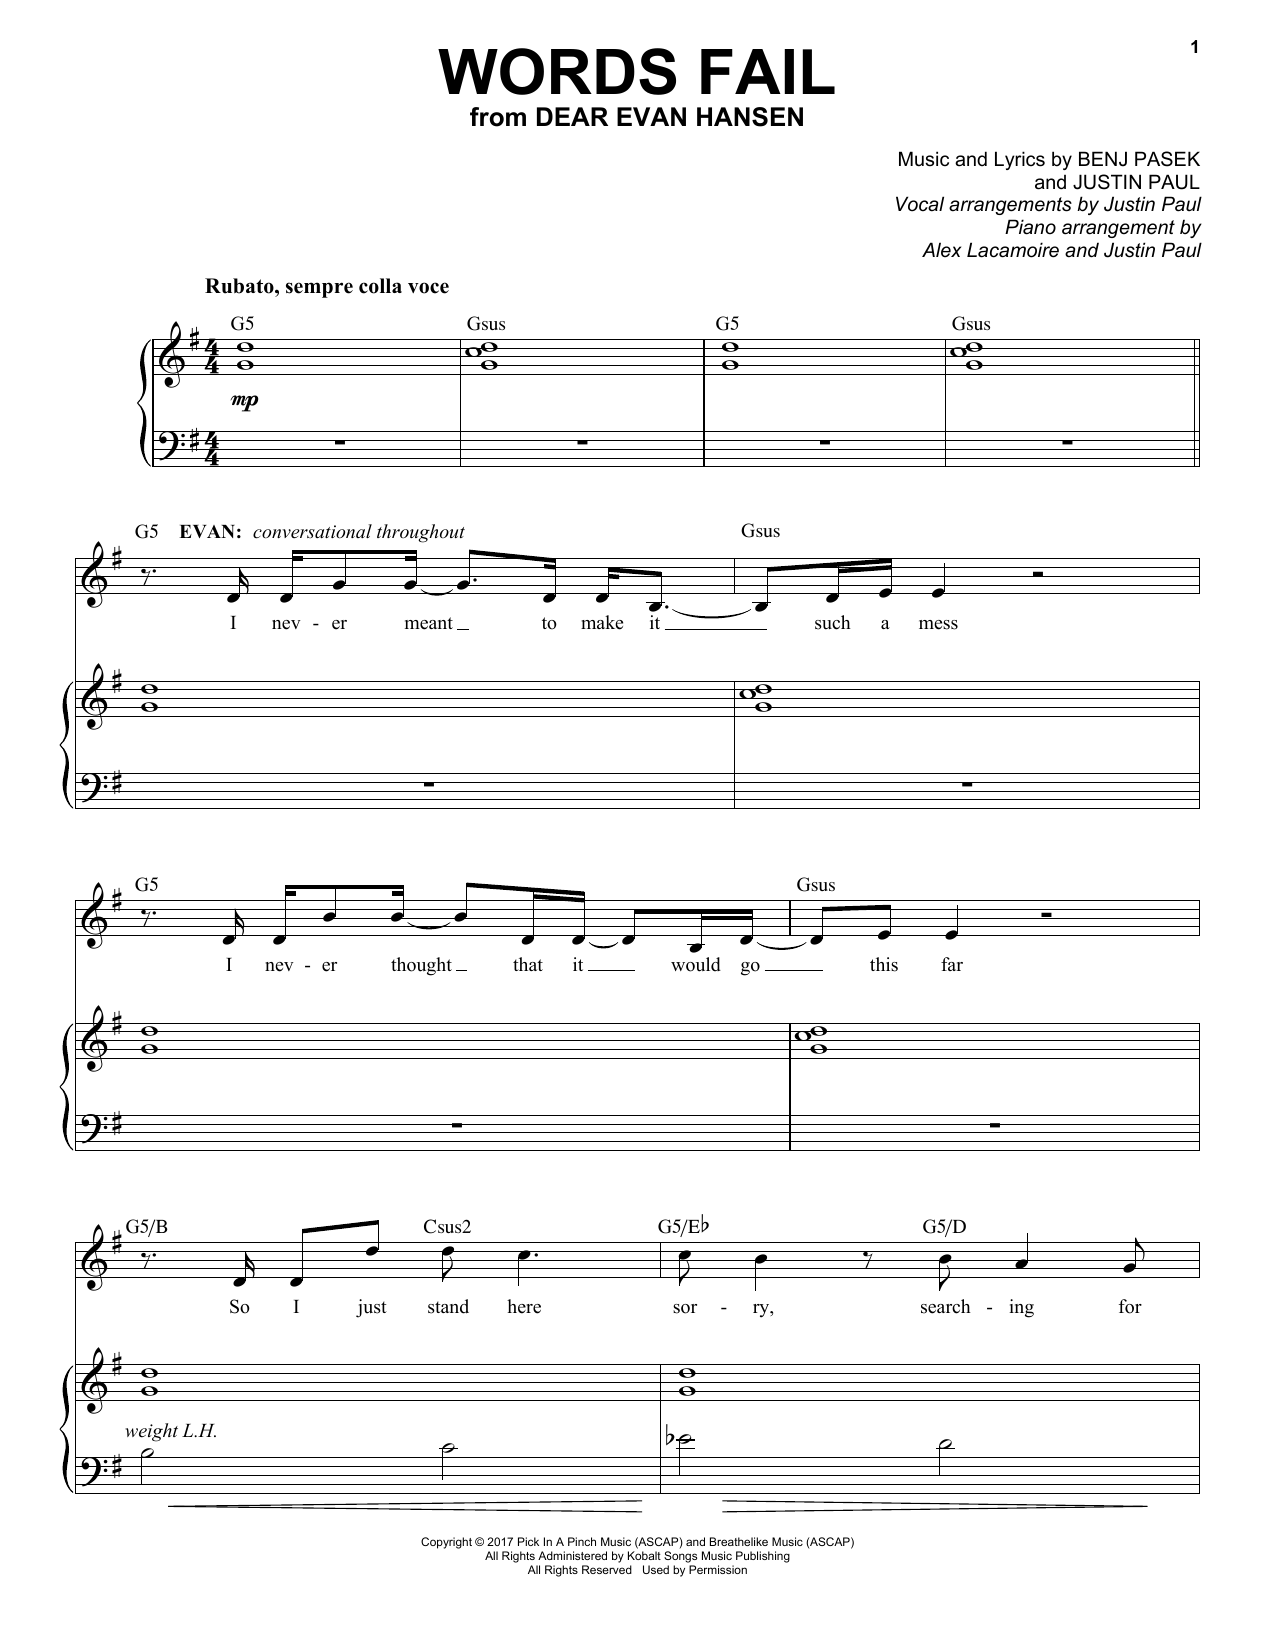 Pasek & Paul Words Fail (from Dear Evan Hansen) Sheet Music Notes & Chords for Guitar Chords/Lyrics - Download or Print PDF